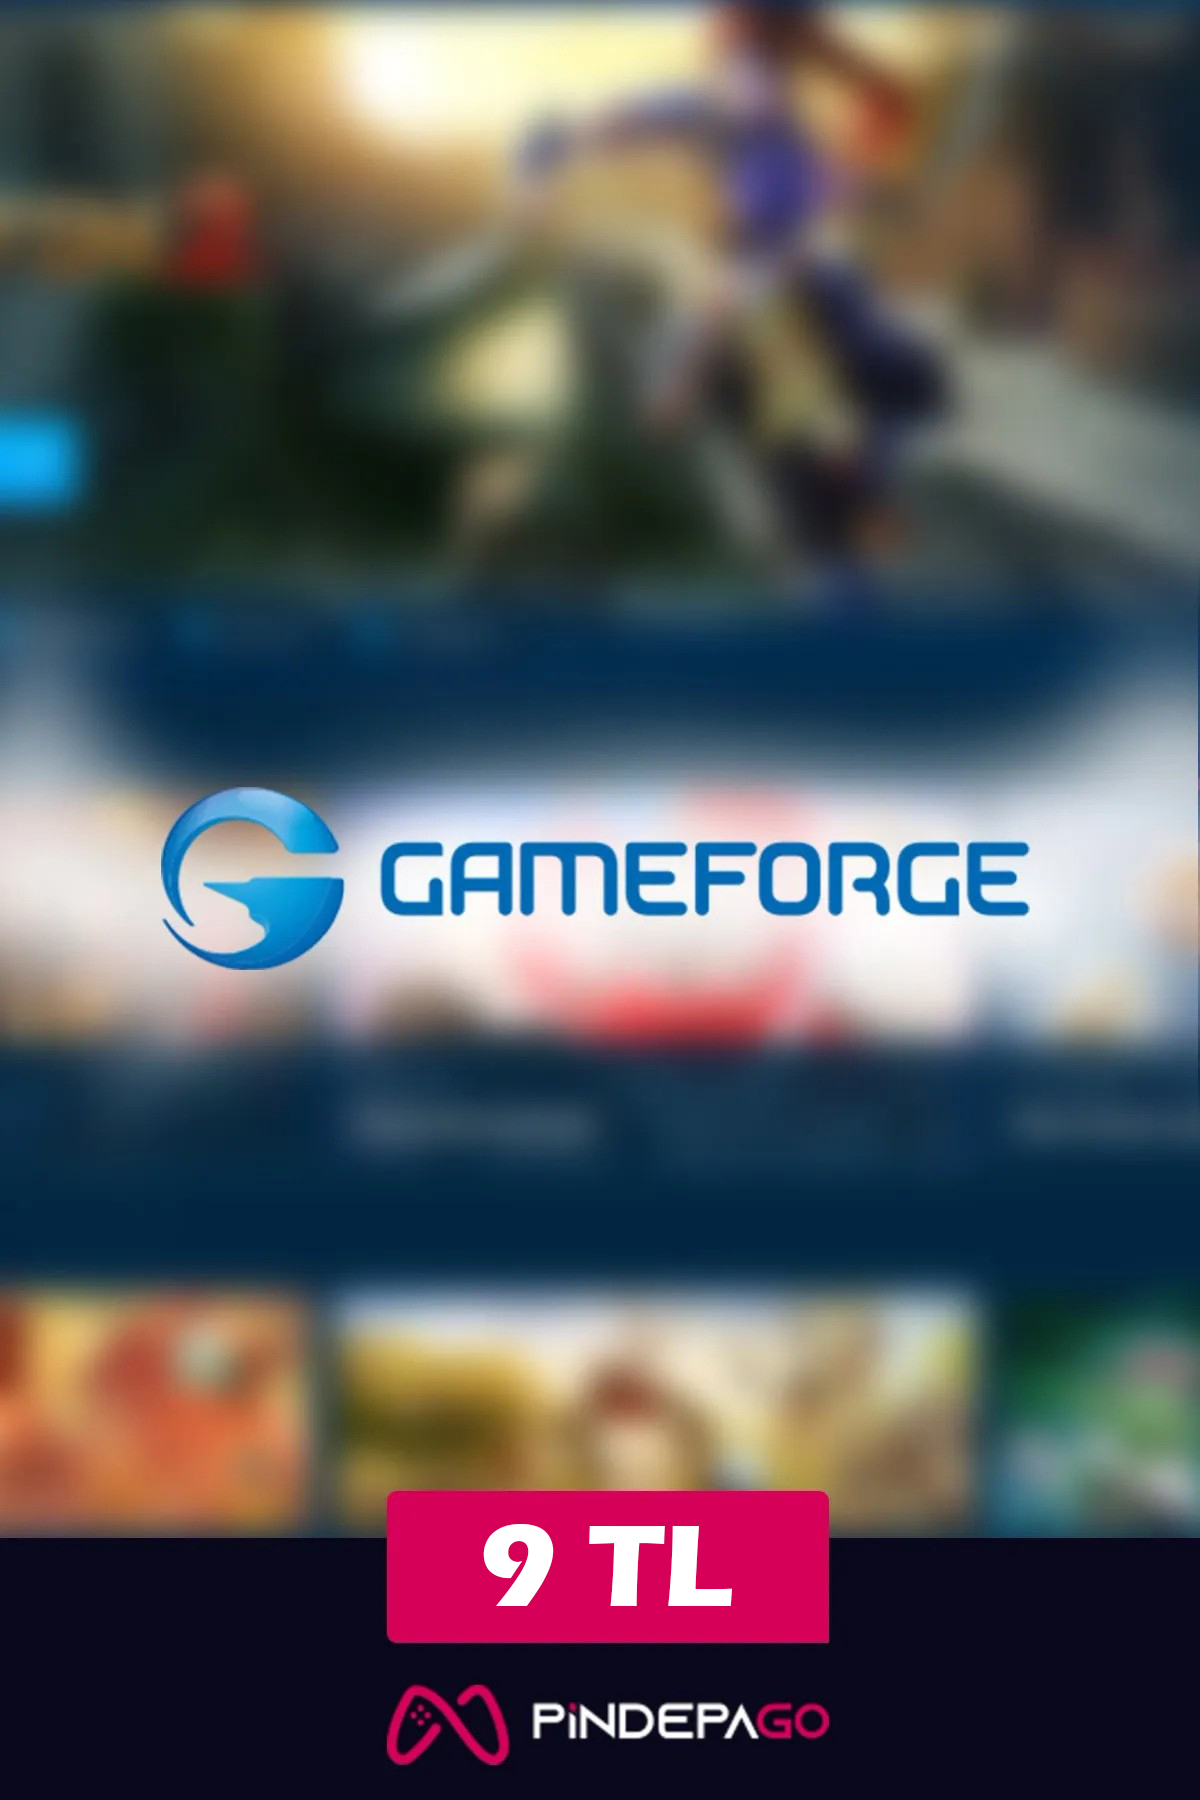 Gameforge 9 TL